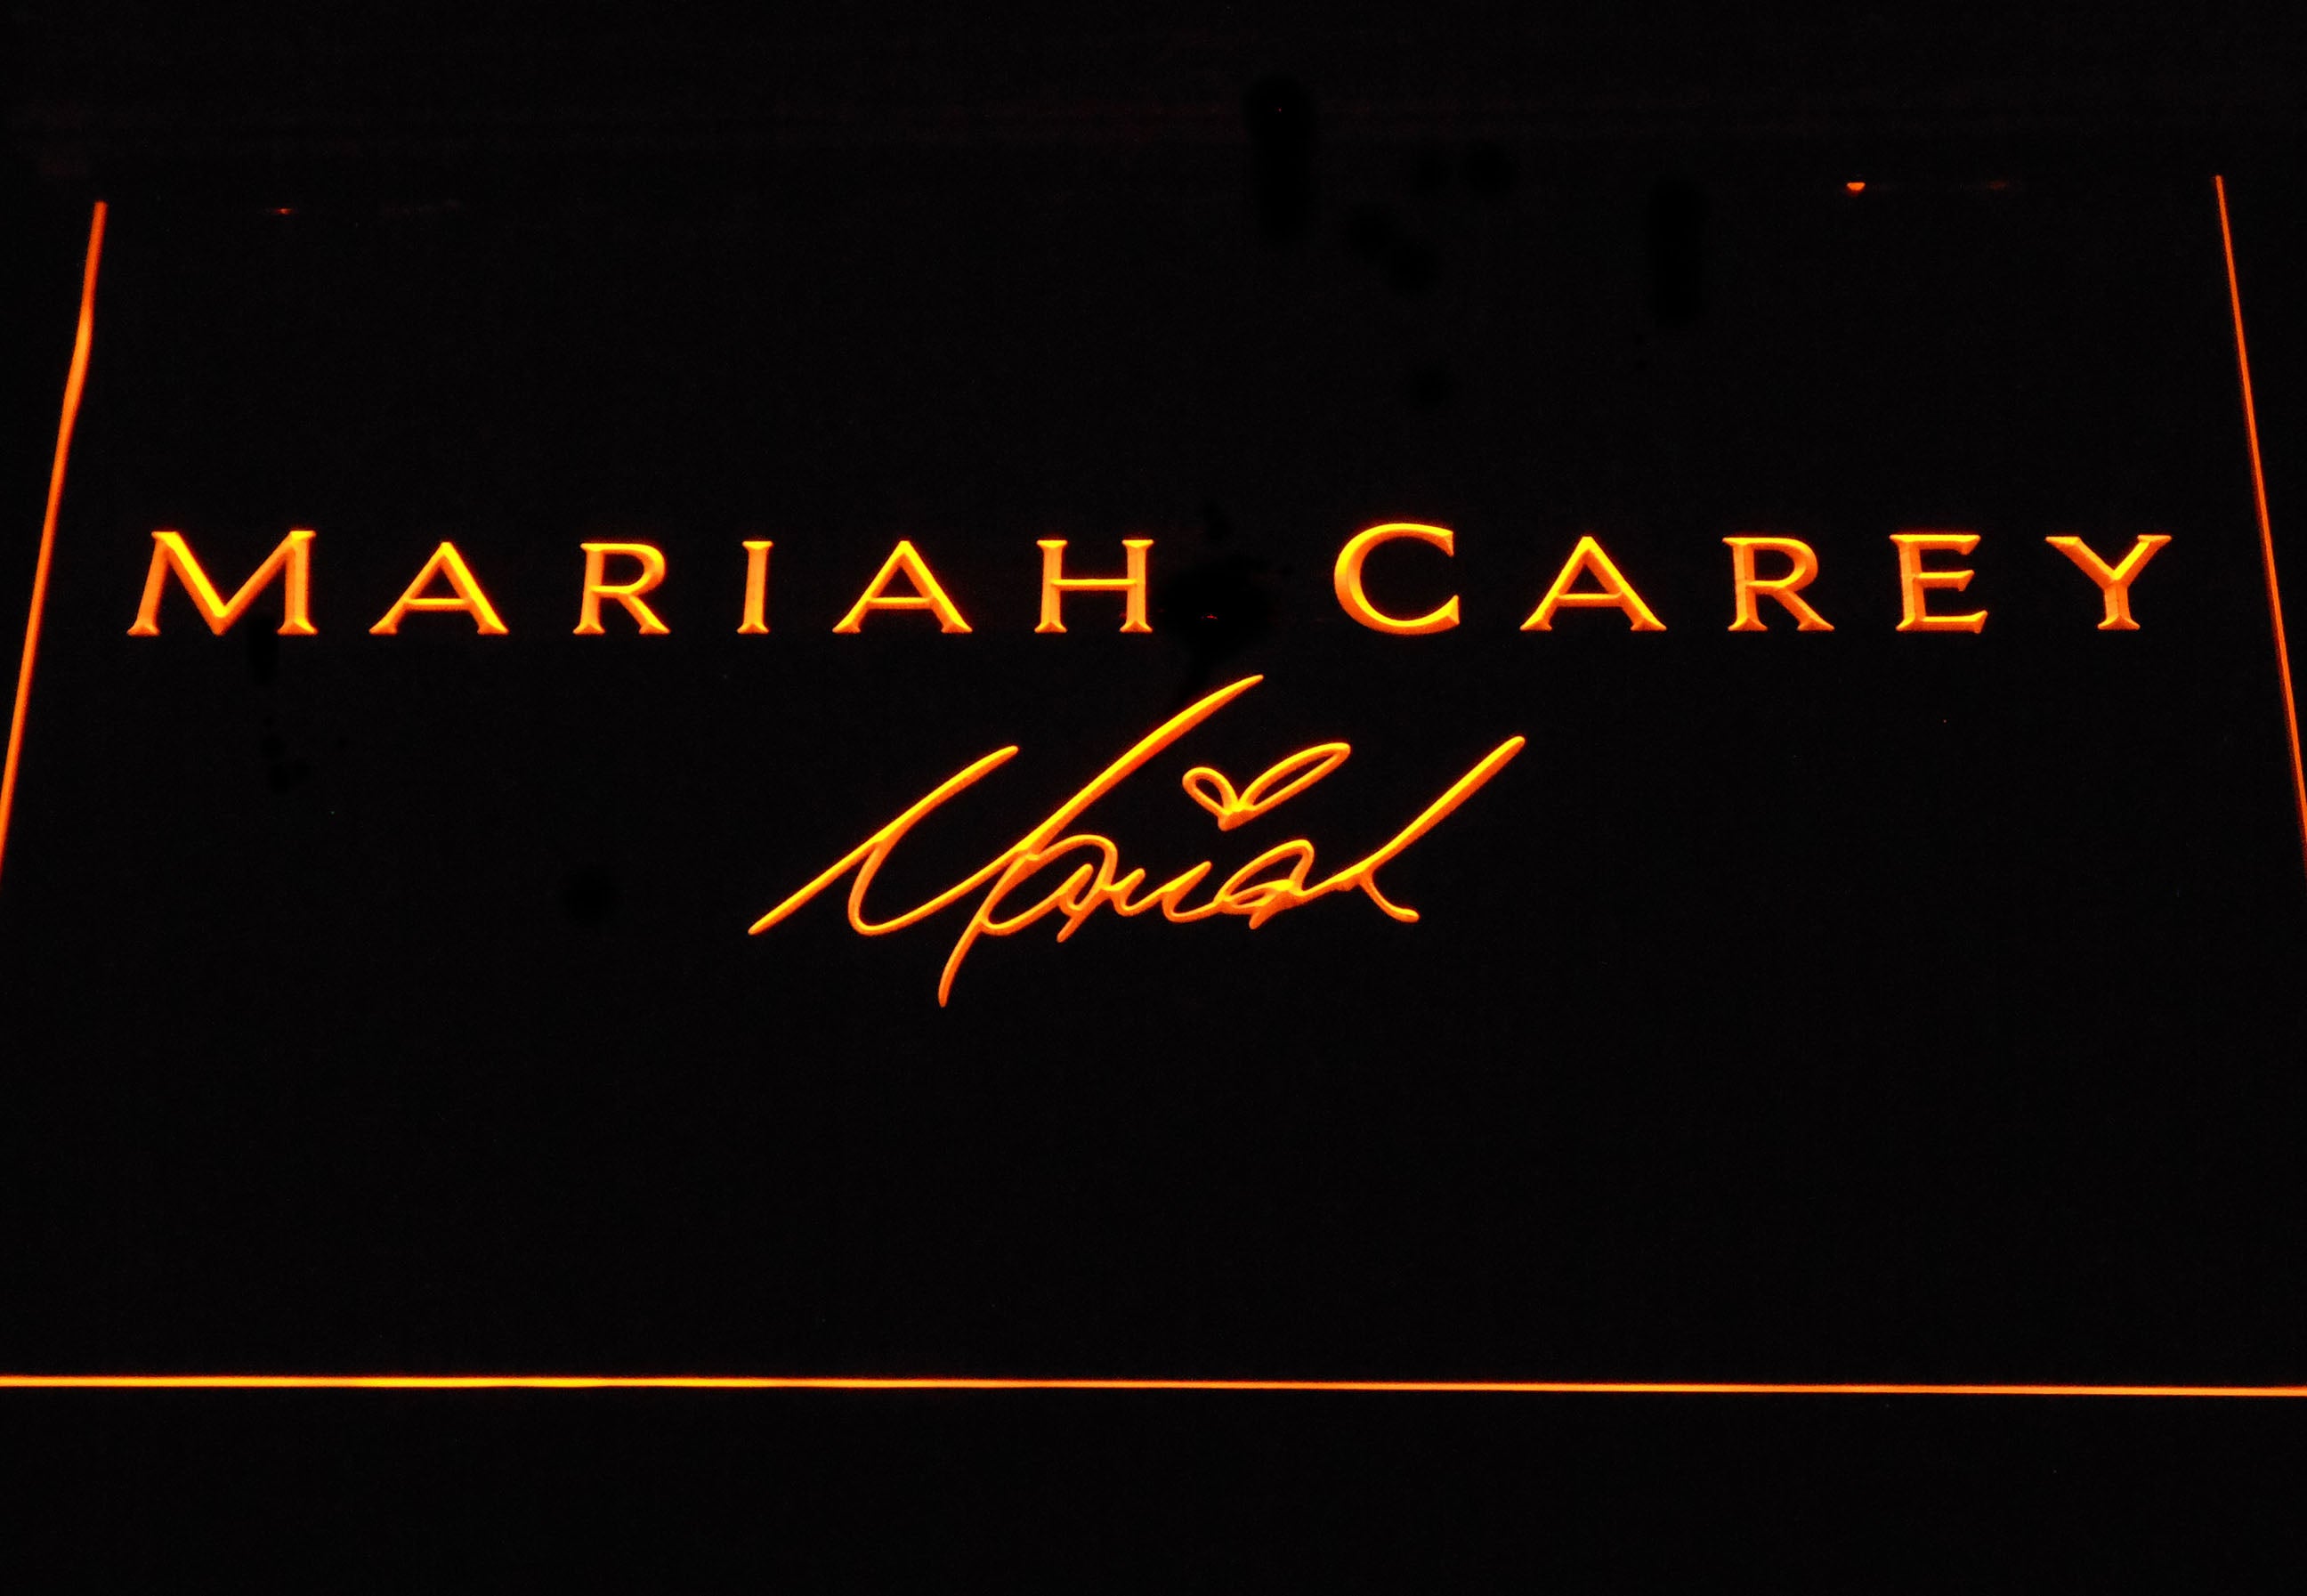 Mariah Carey Pop Song Singer LED Neon Sign